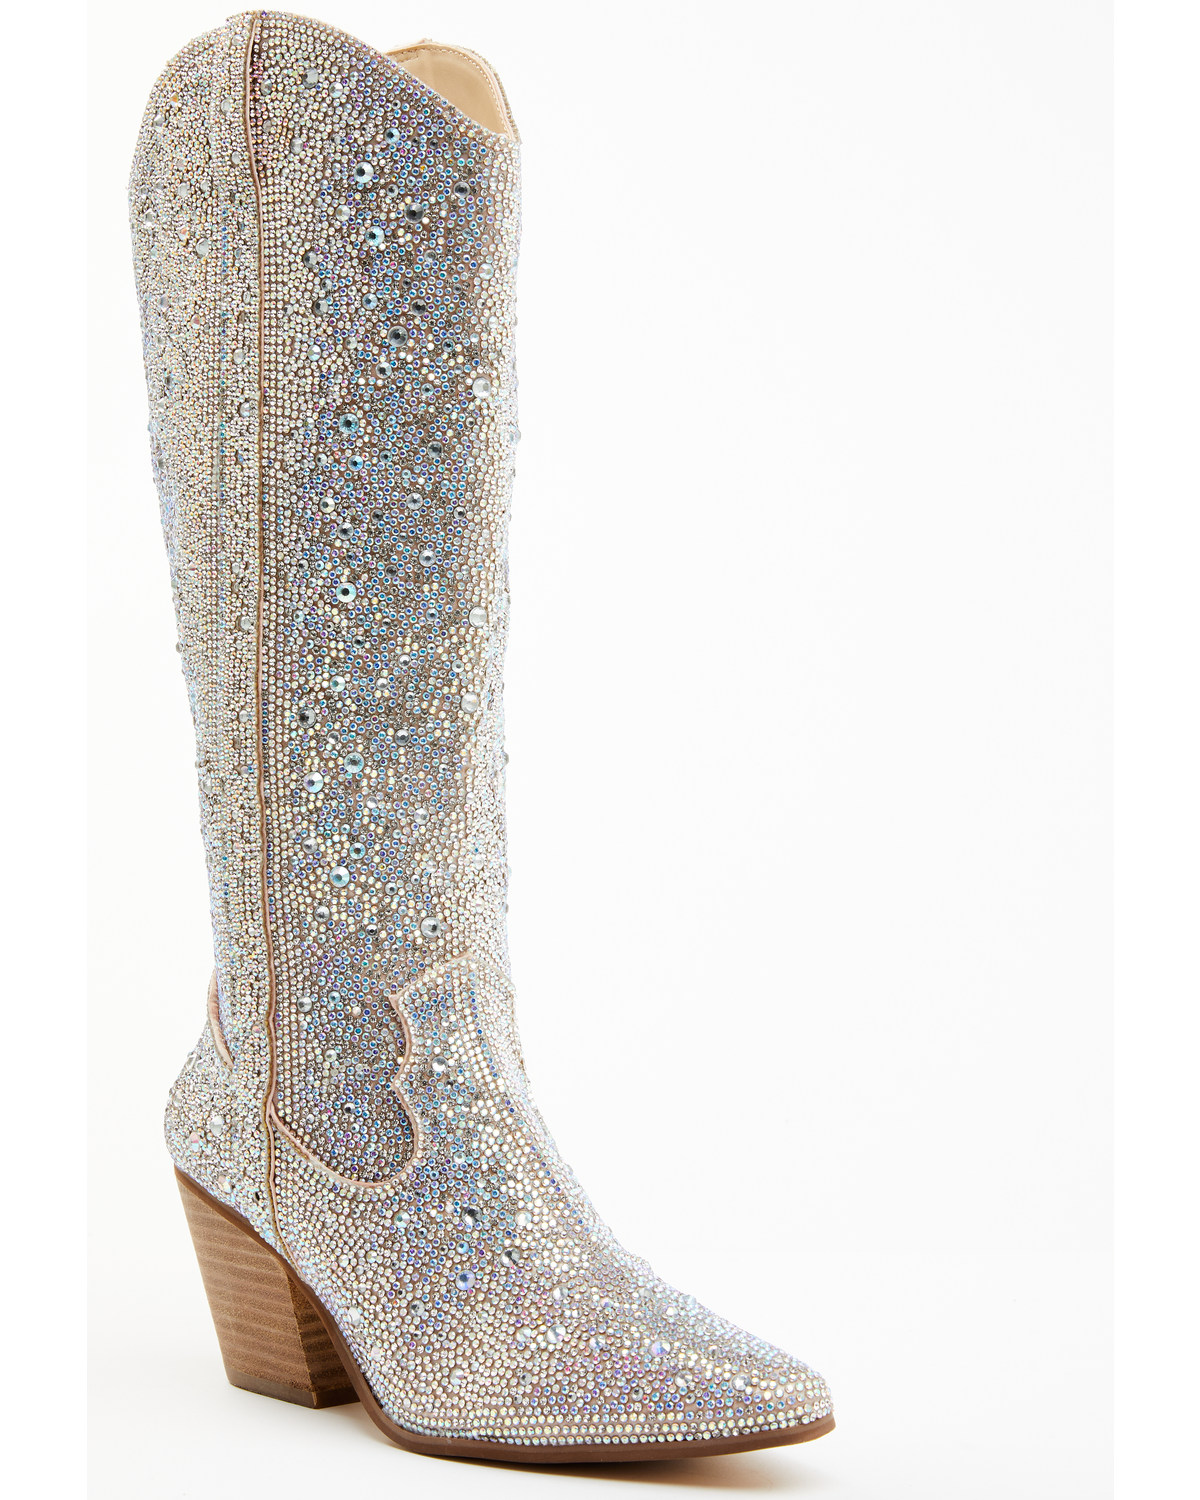 Matisse Women's Nashville Rhinestone Tall Western Fashion Boots - Pointed Toe